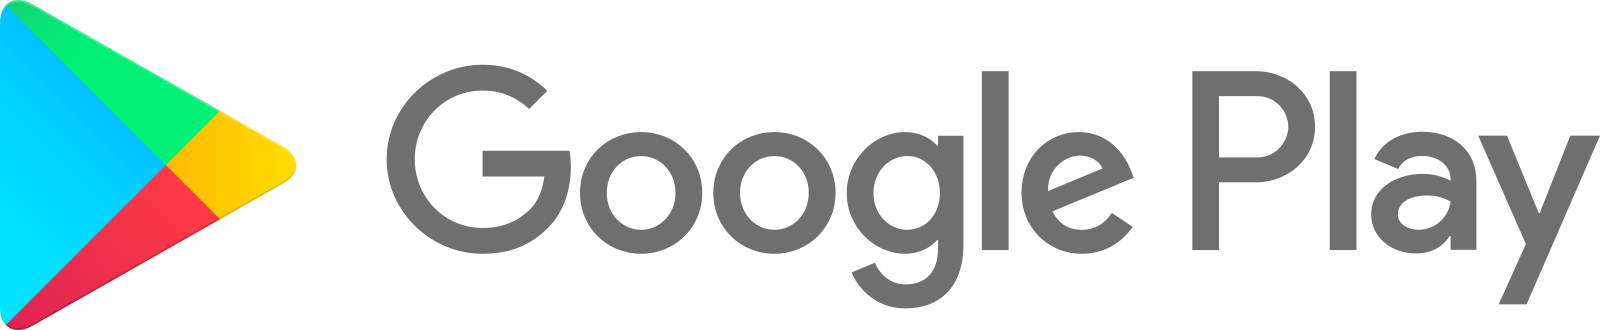 google play logo 2 - Google Play Logo